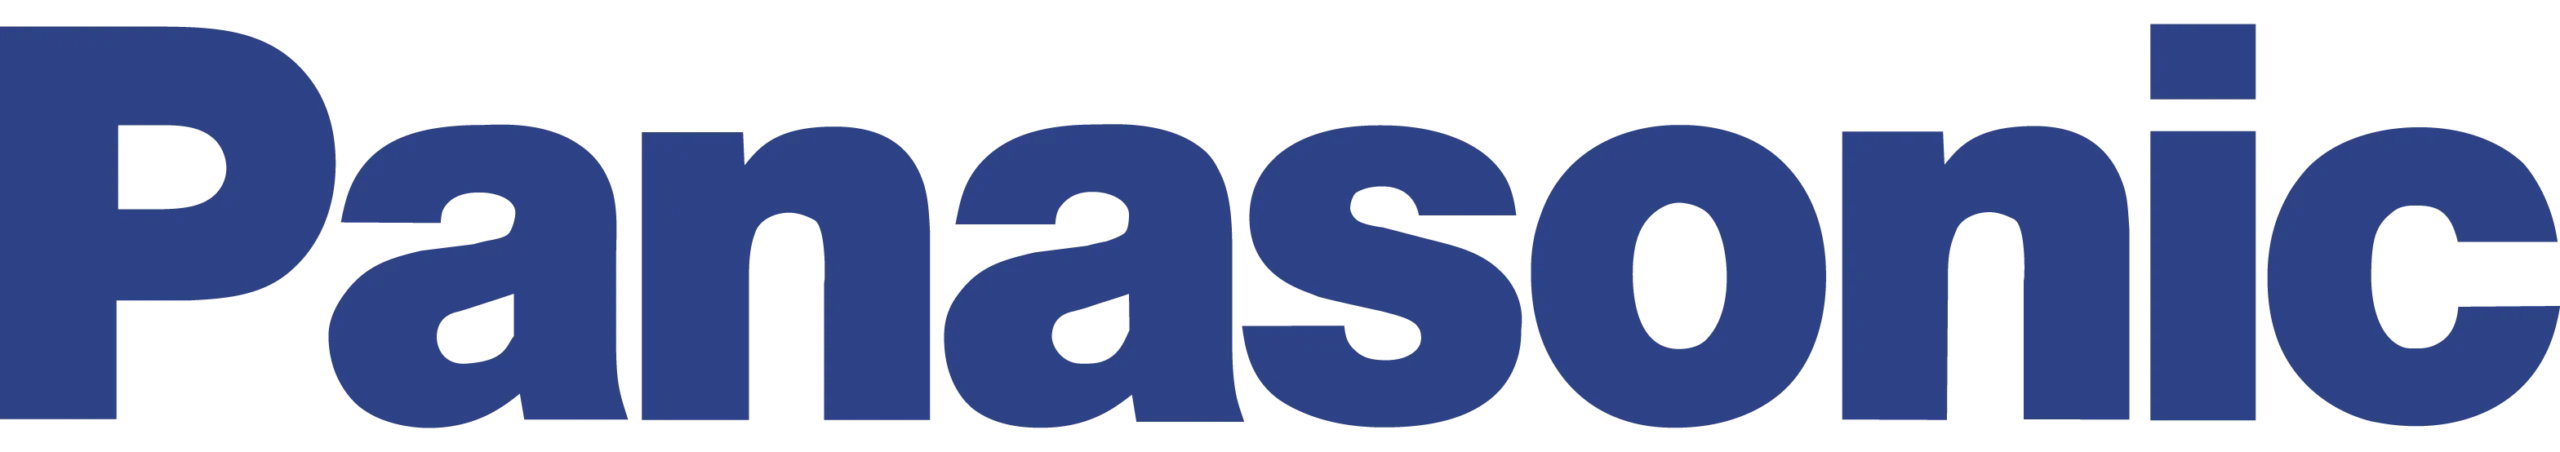 Panasonic-Logo copy